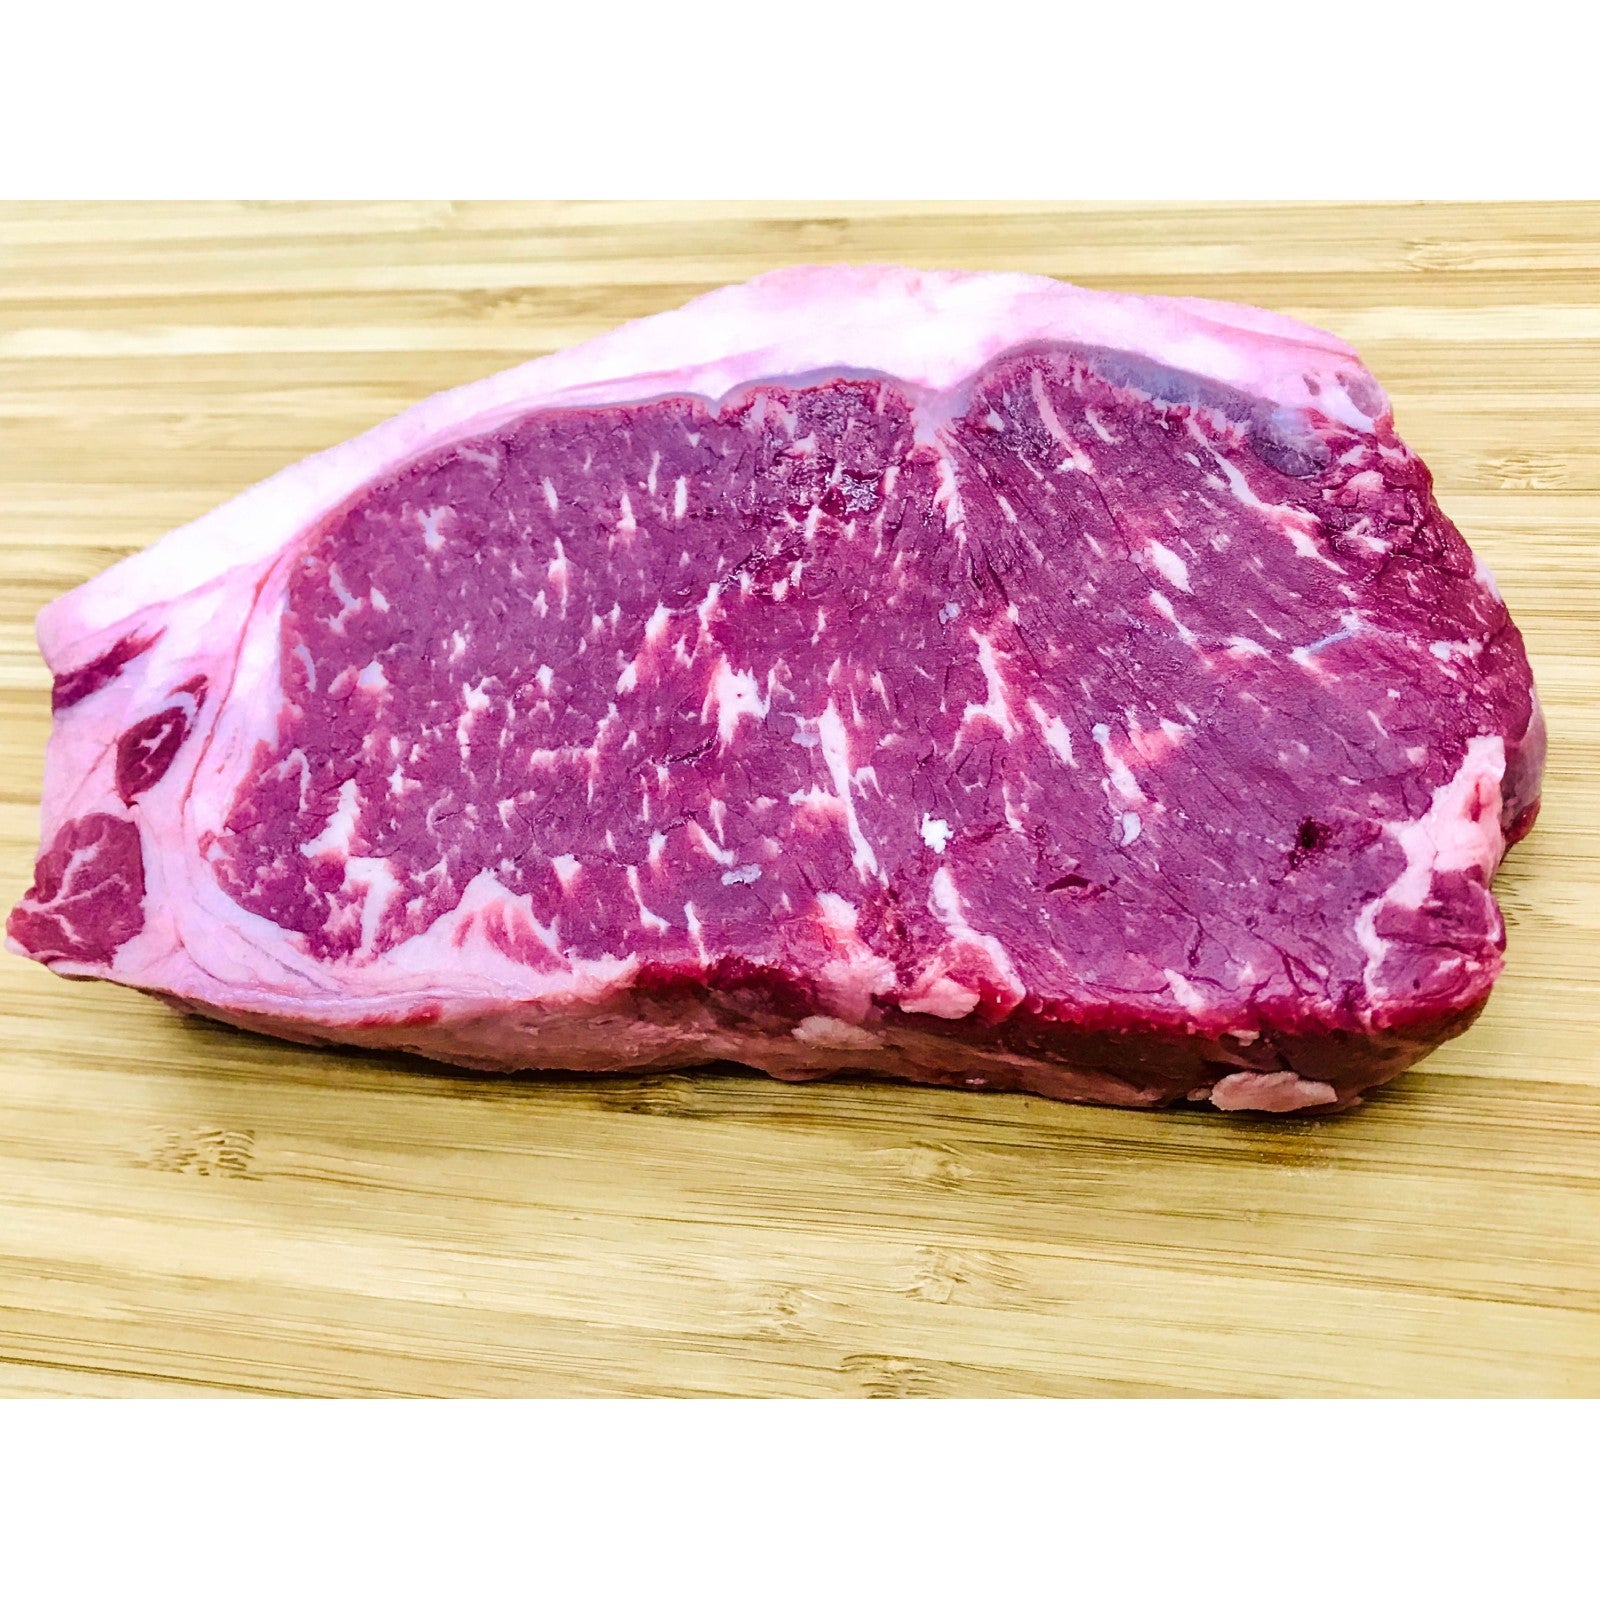 Usa Certified Angus Beef Striploin Steak 400g Chilled 